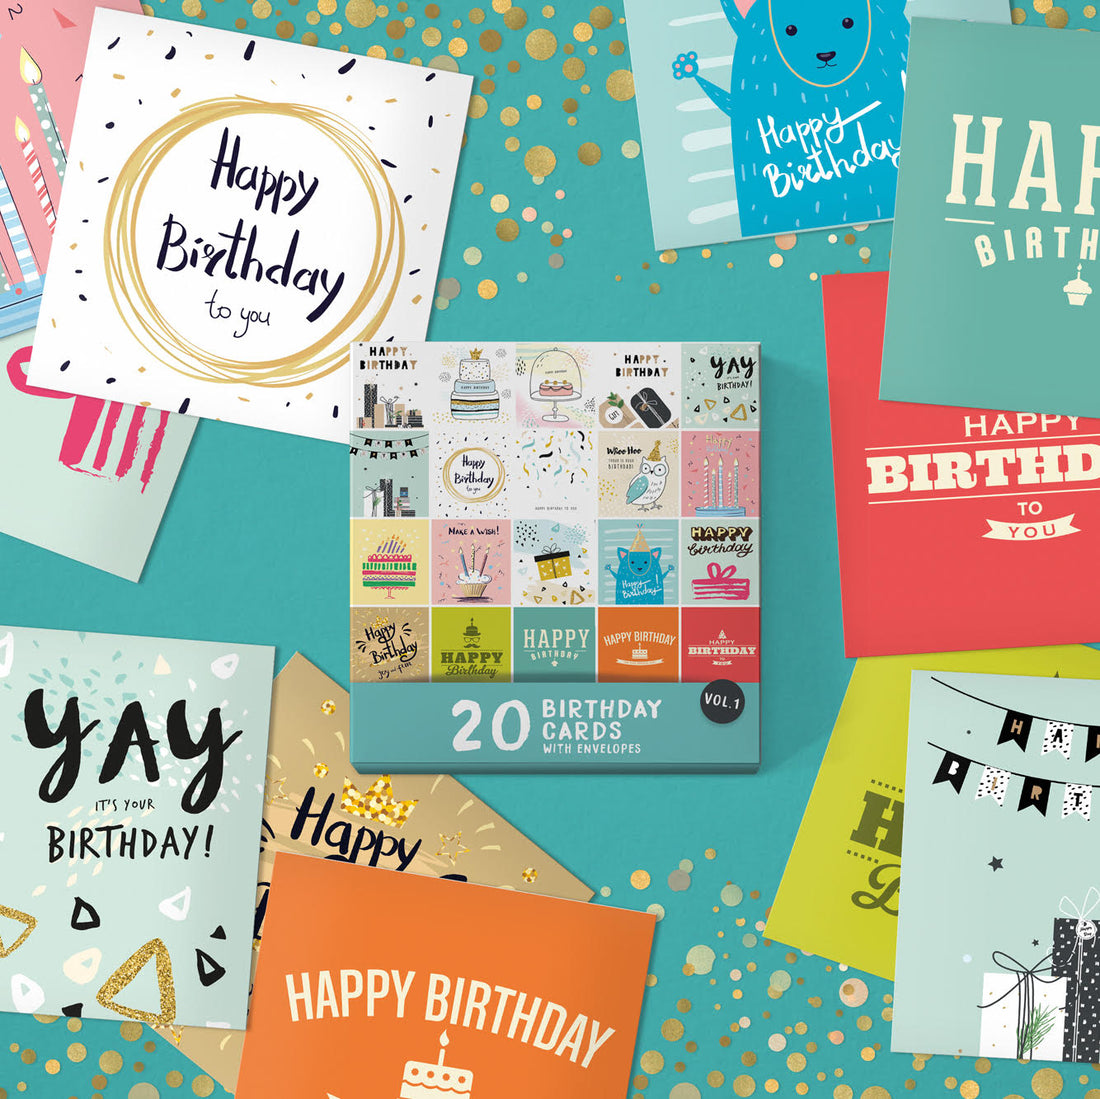 5 Reasons Why People Buy Birthday Cards In Bulk.